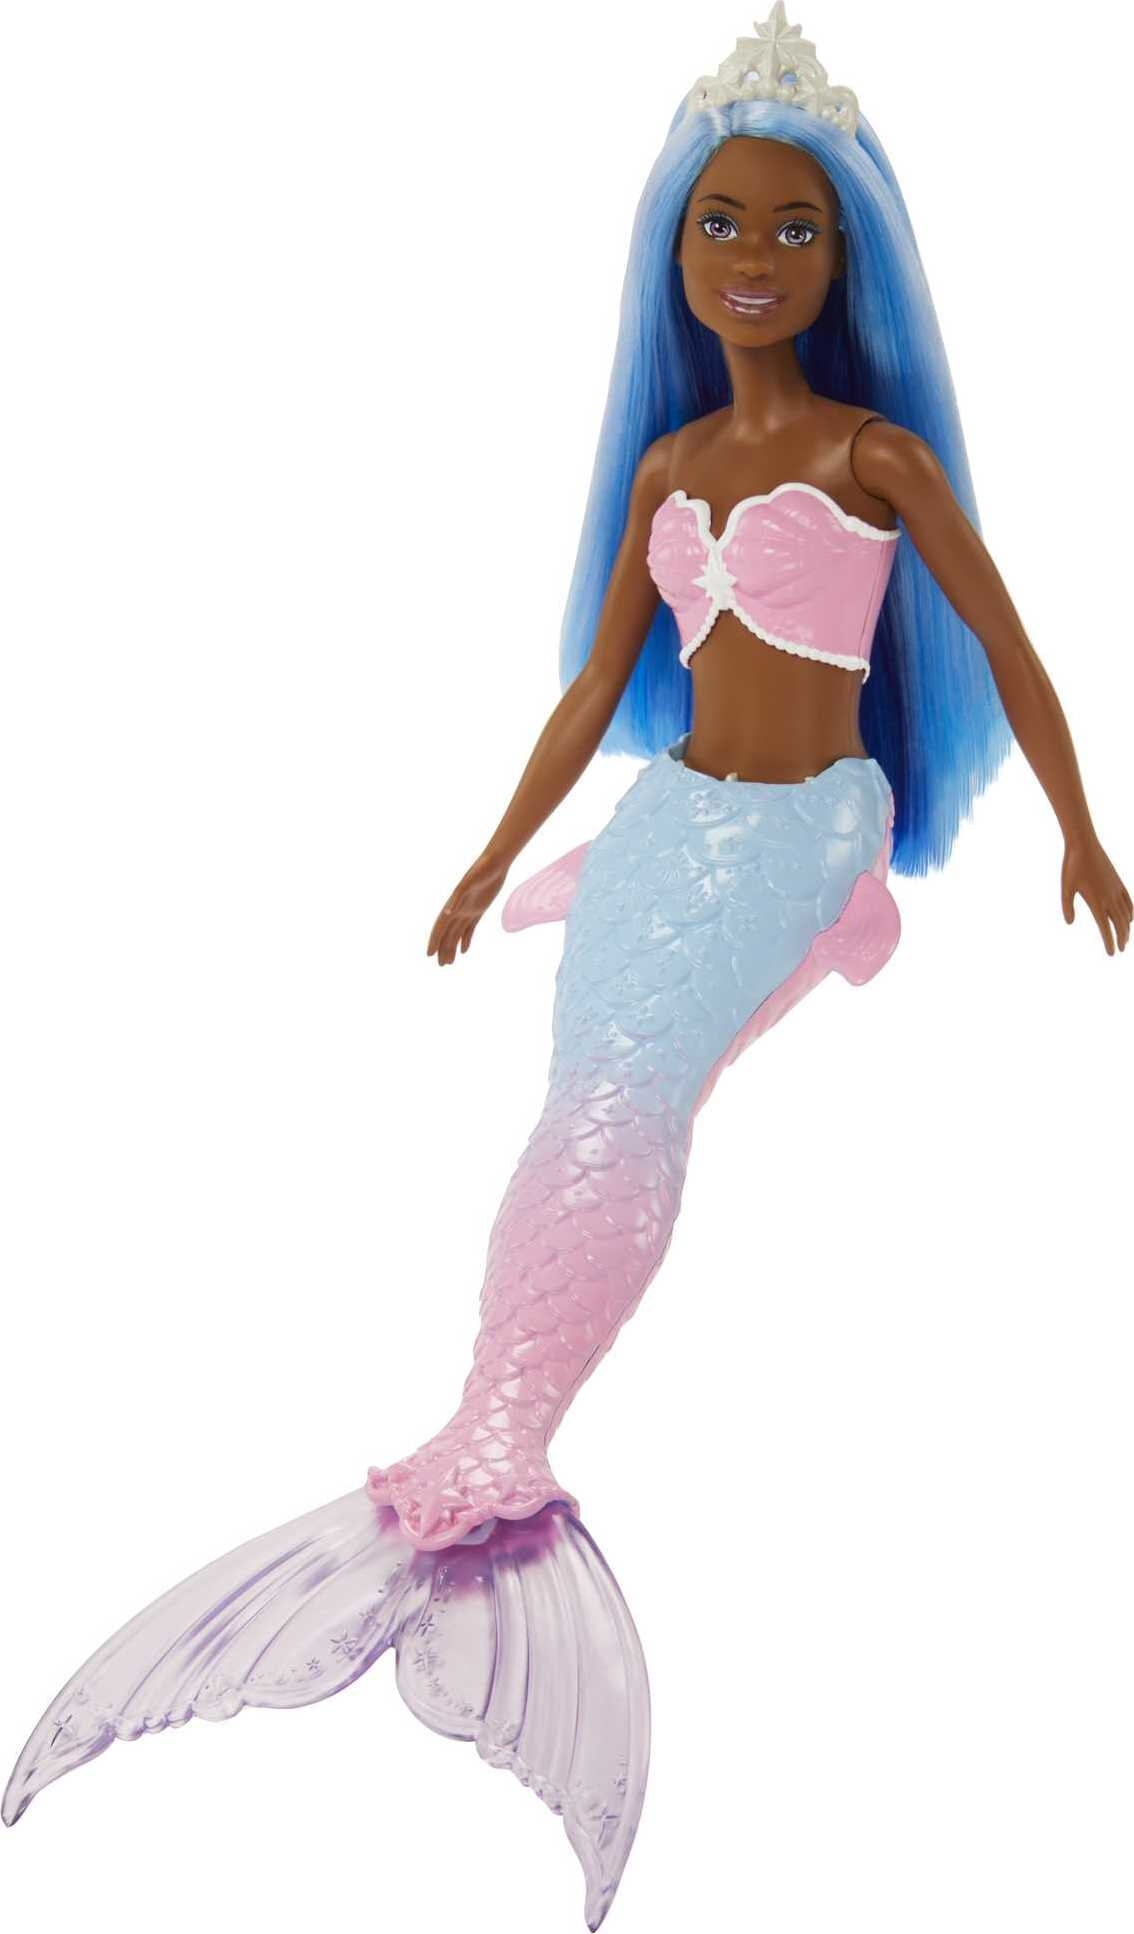 Barbie Dreamtopia Mermaid Doll with Blue Tail & Tiara Accessory Walmart.com